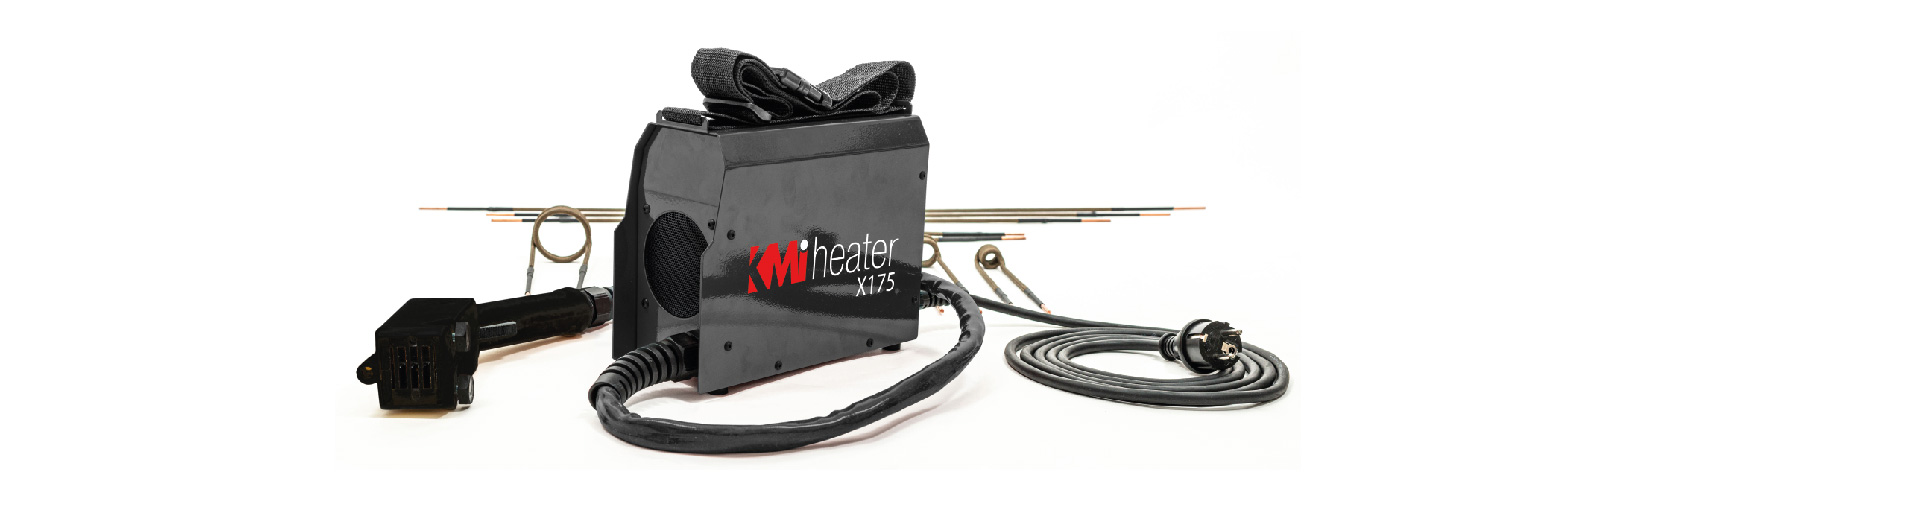 Induction Heater KMi Heater X175